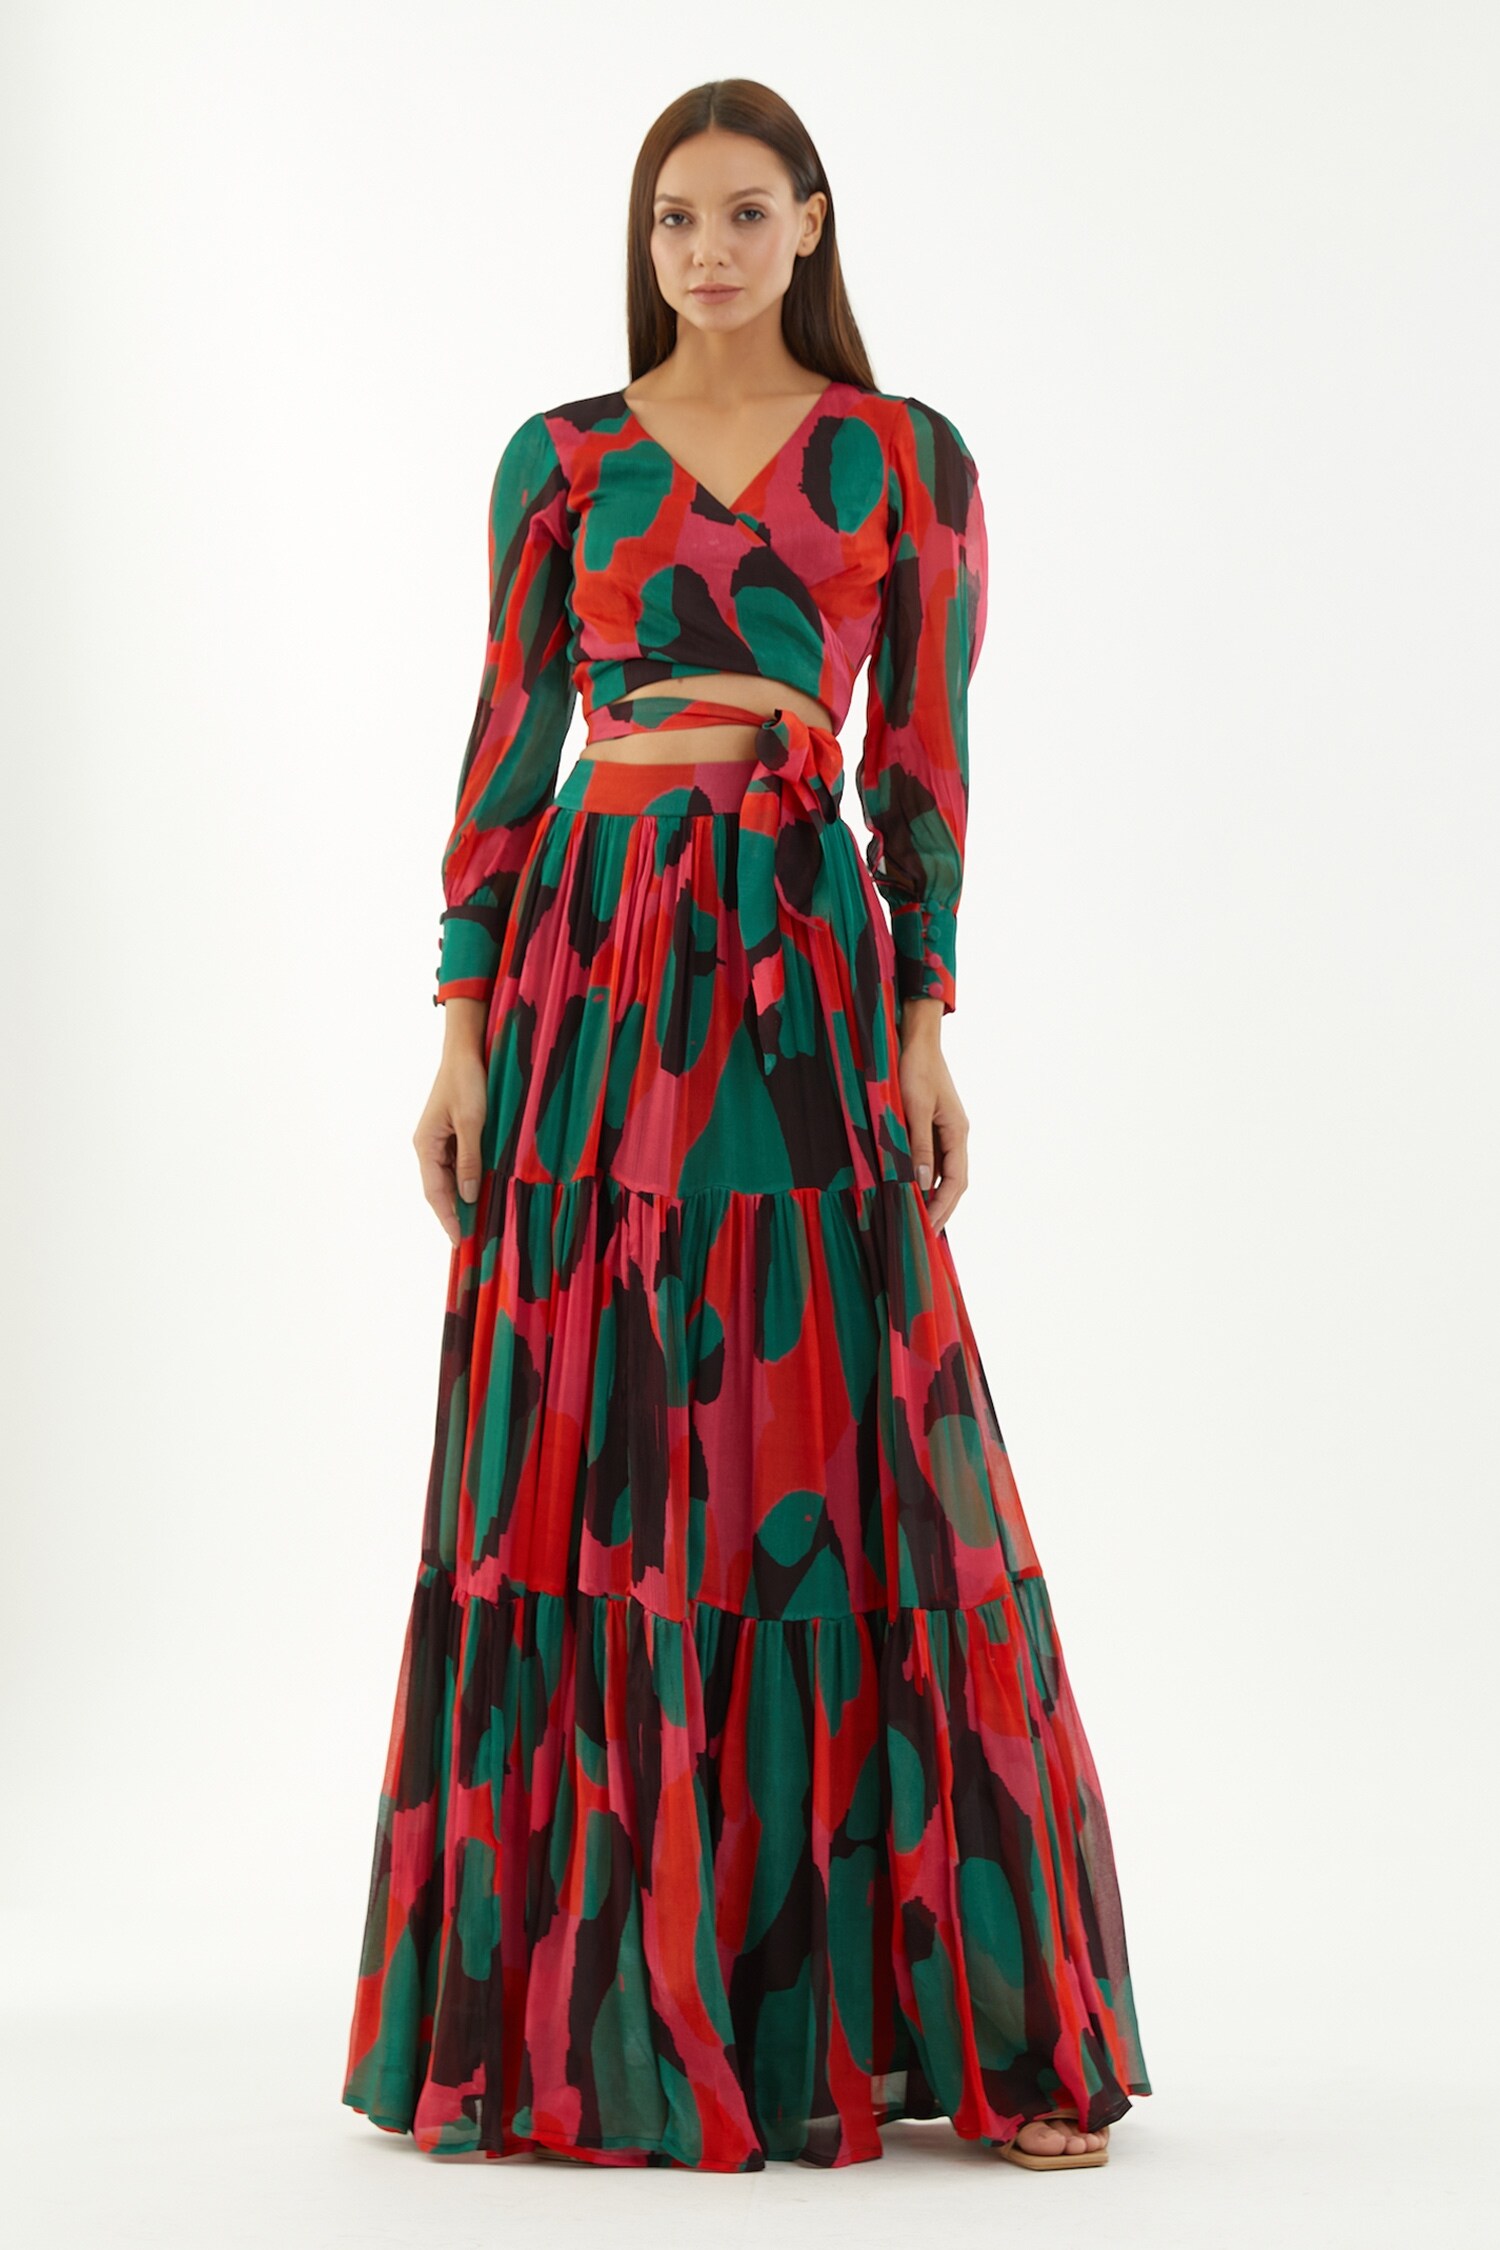 KoAi Multi Color Chiffon Abstract Pattern Tiered Skirt